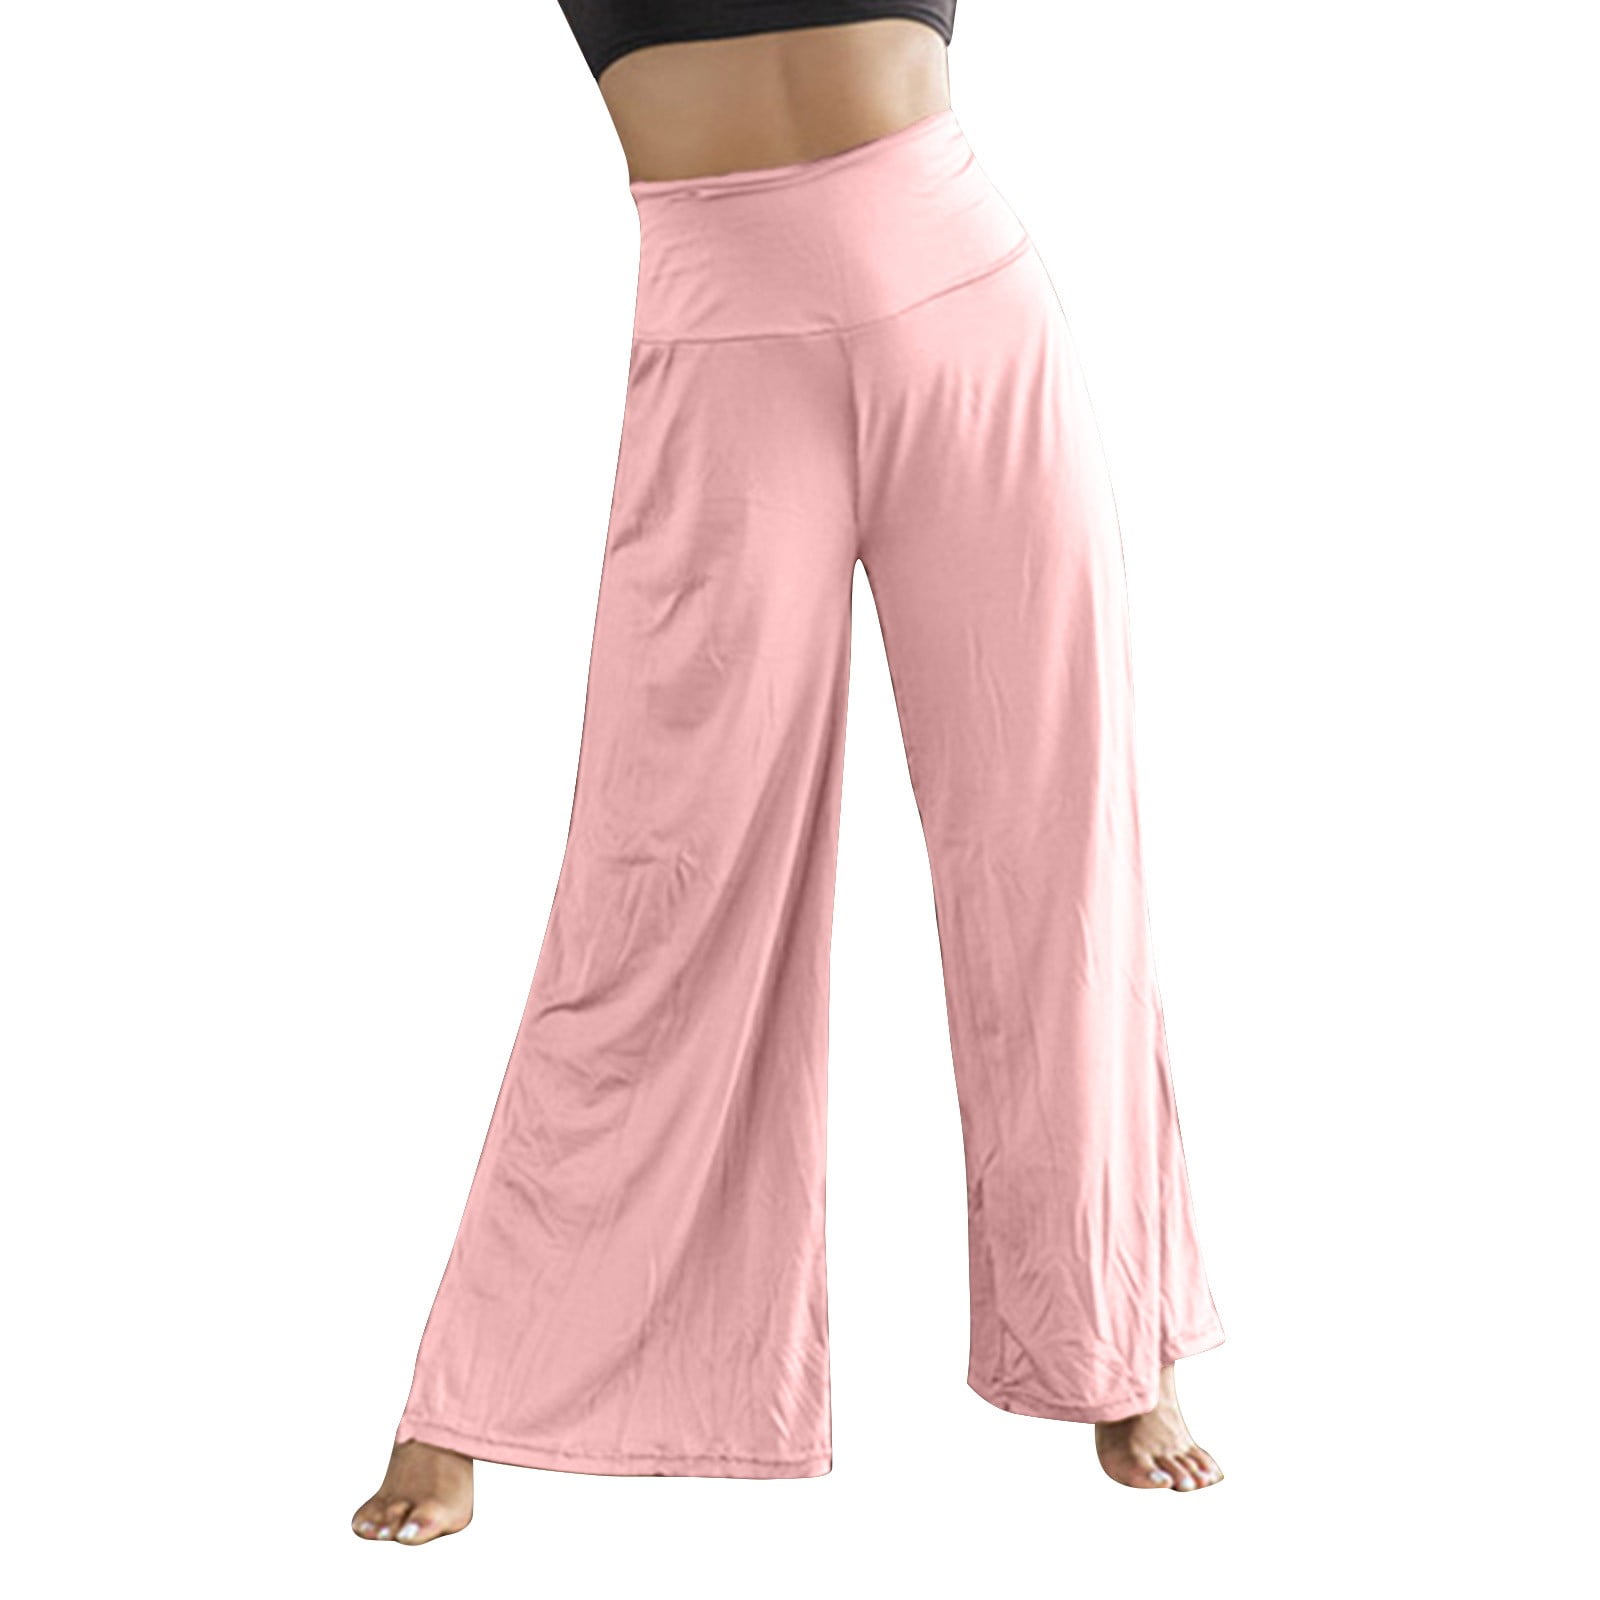 2DXuixsh Plus Size Yoga Pants for Women 3X Lift Womens Casual High